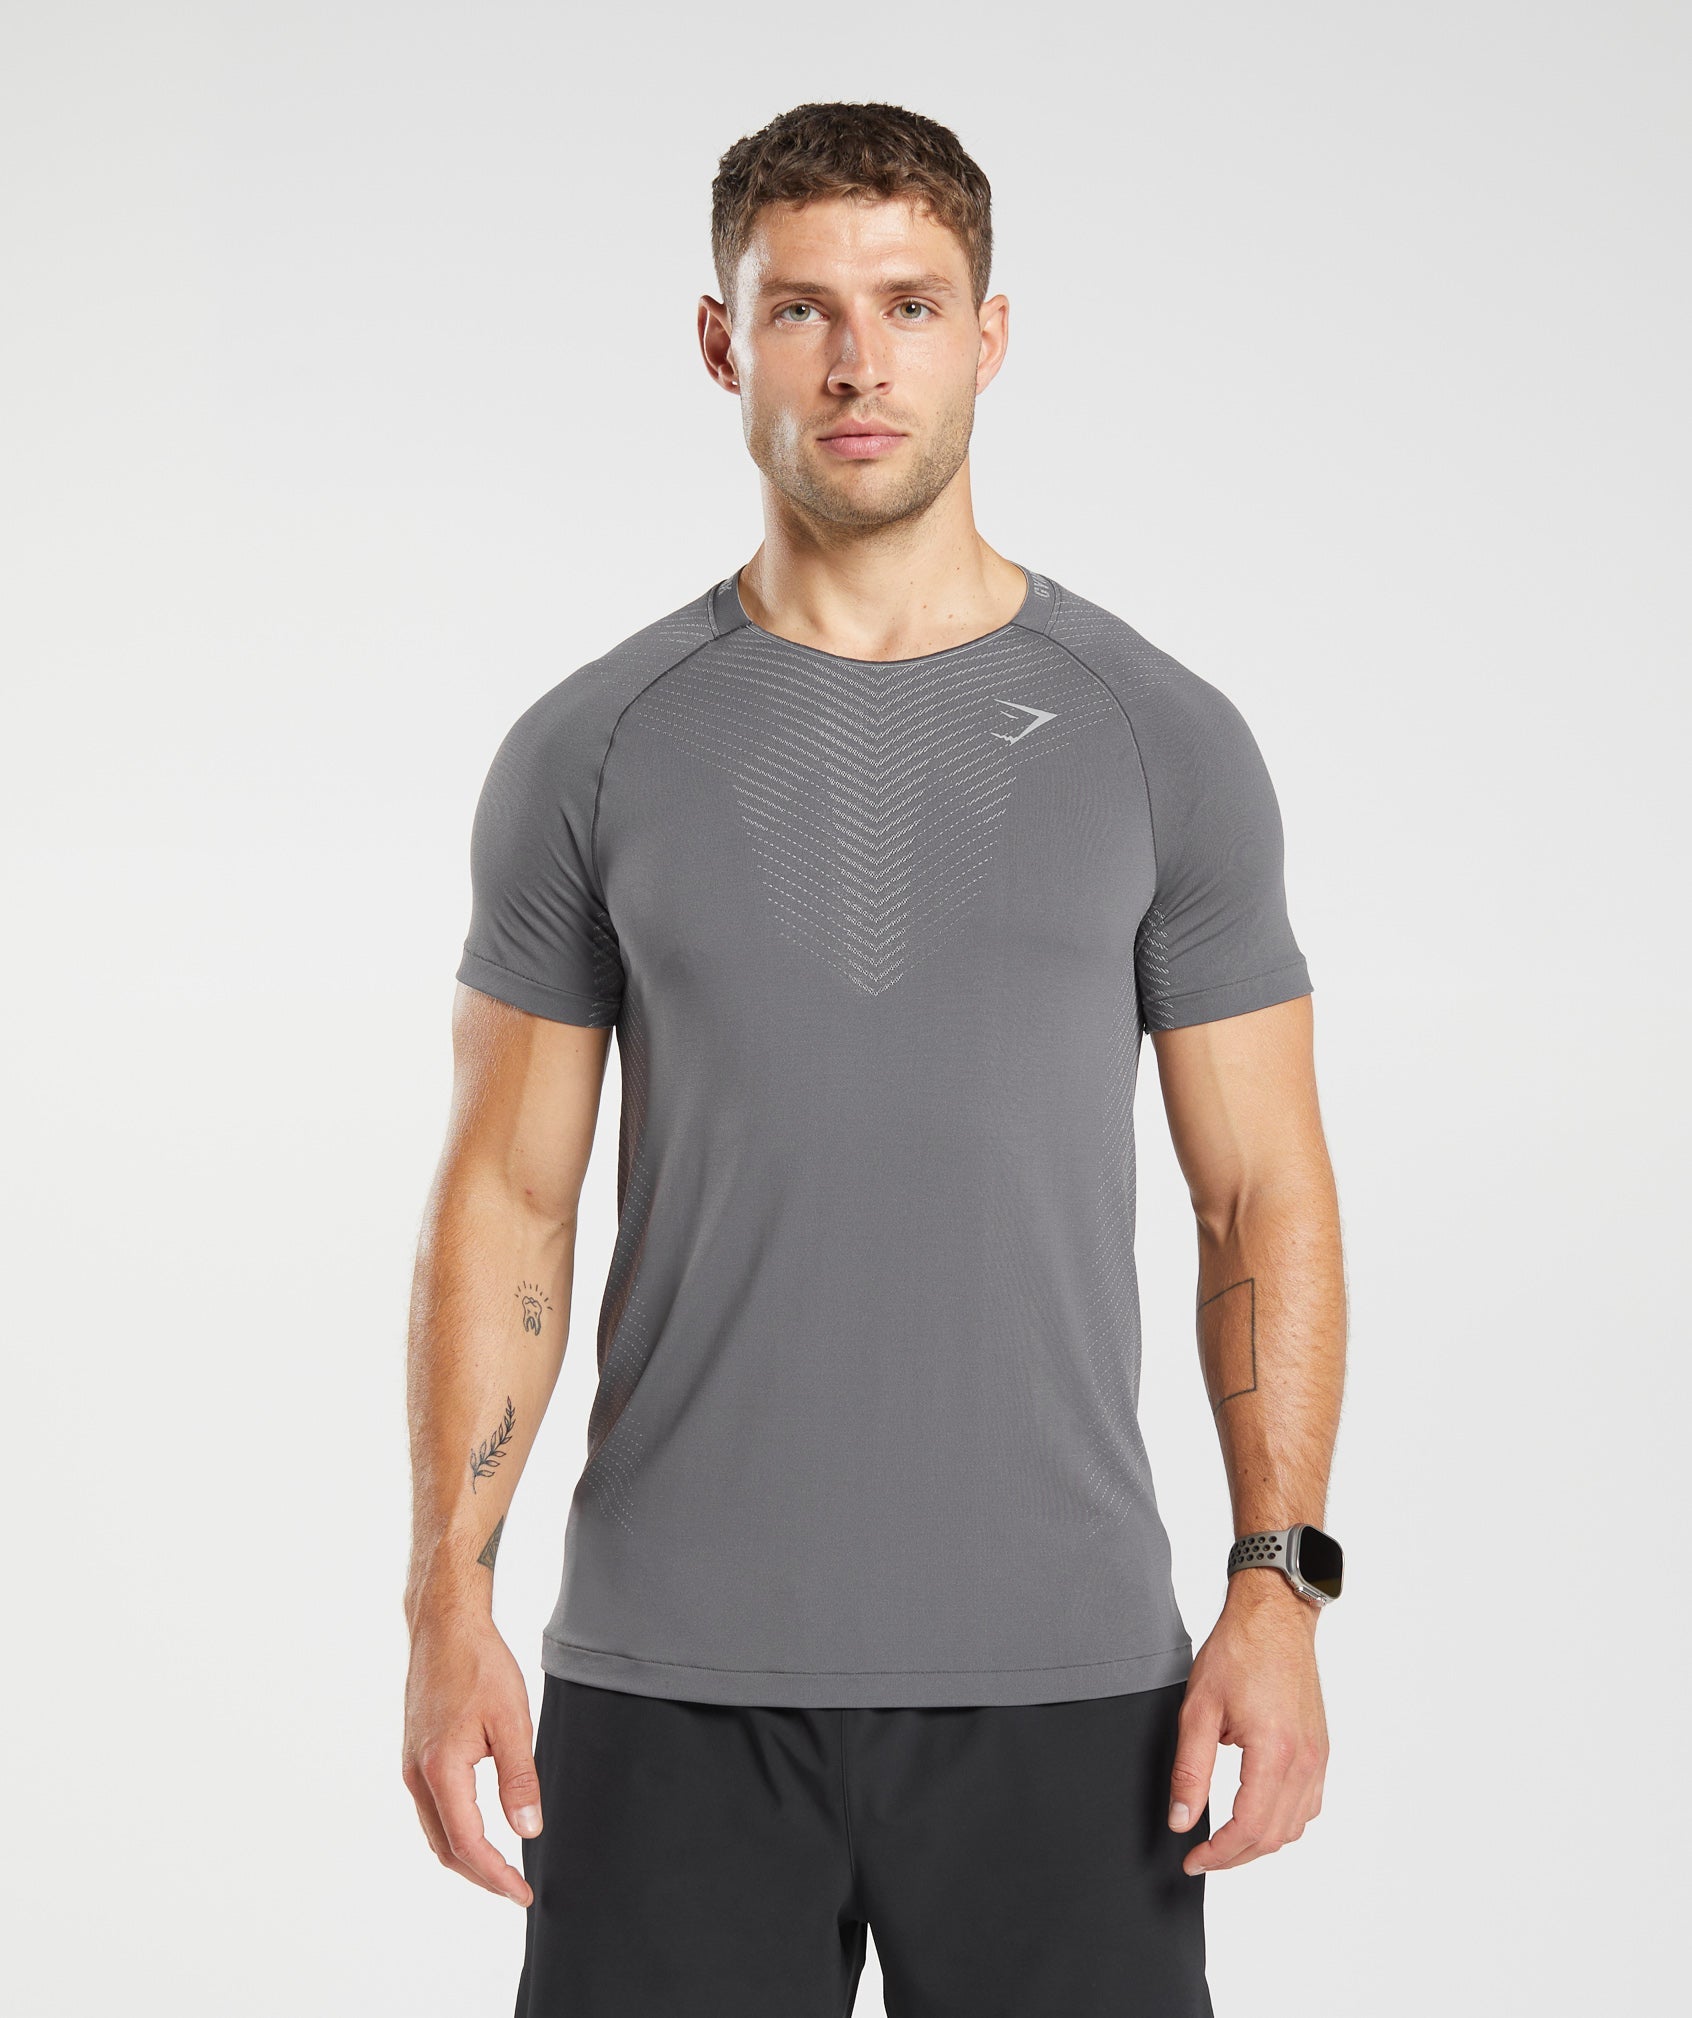 Gymshark Apex Seamless T-Shirt - Dark Grey/Smokey Grey